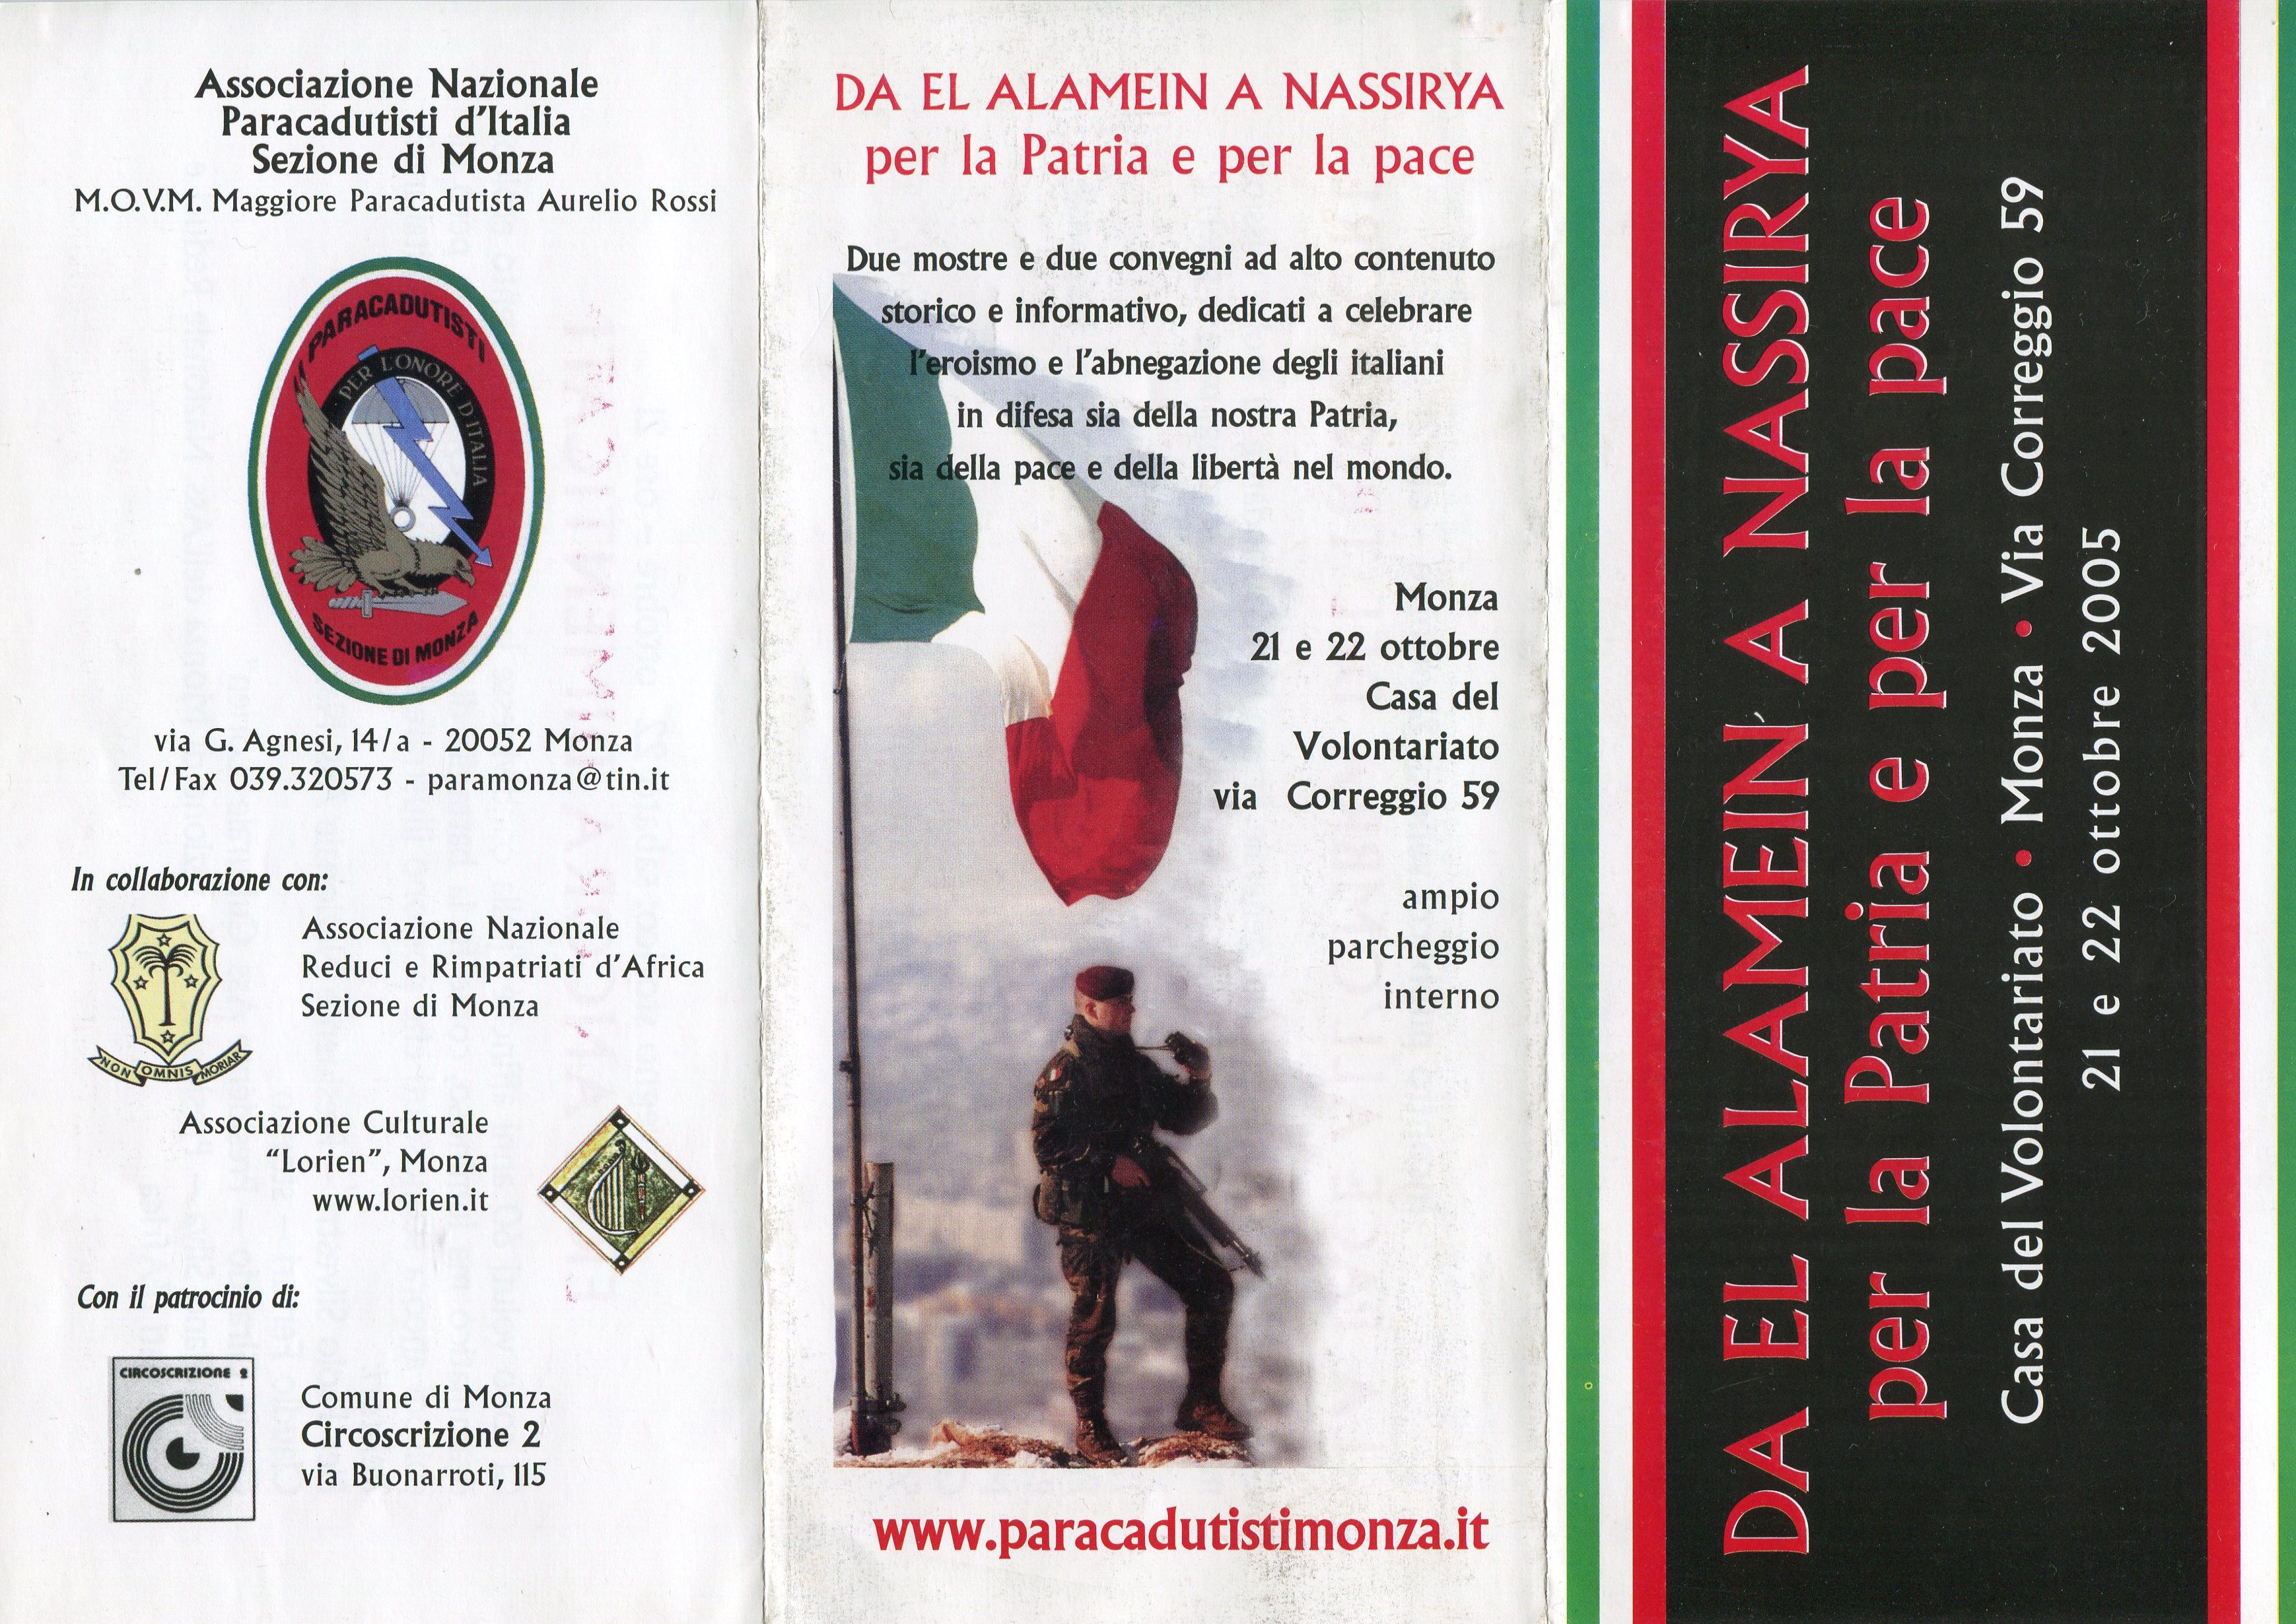 21 e 22 ottobre 2005 Monza - Da El Alamein a Nassirya